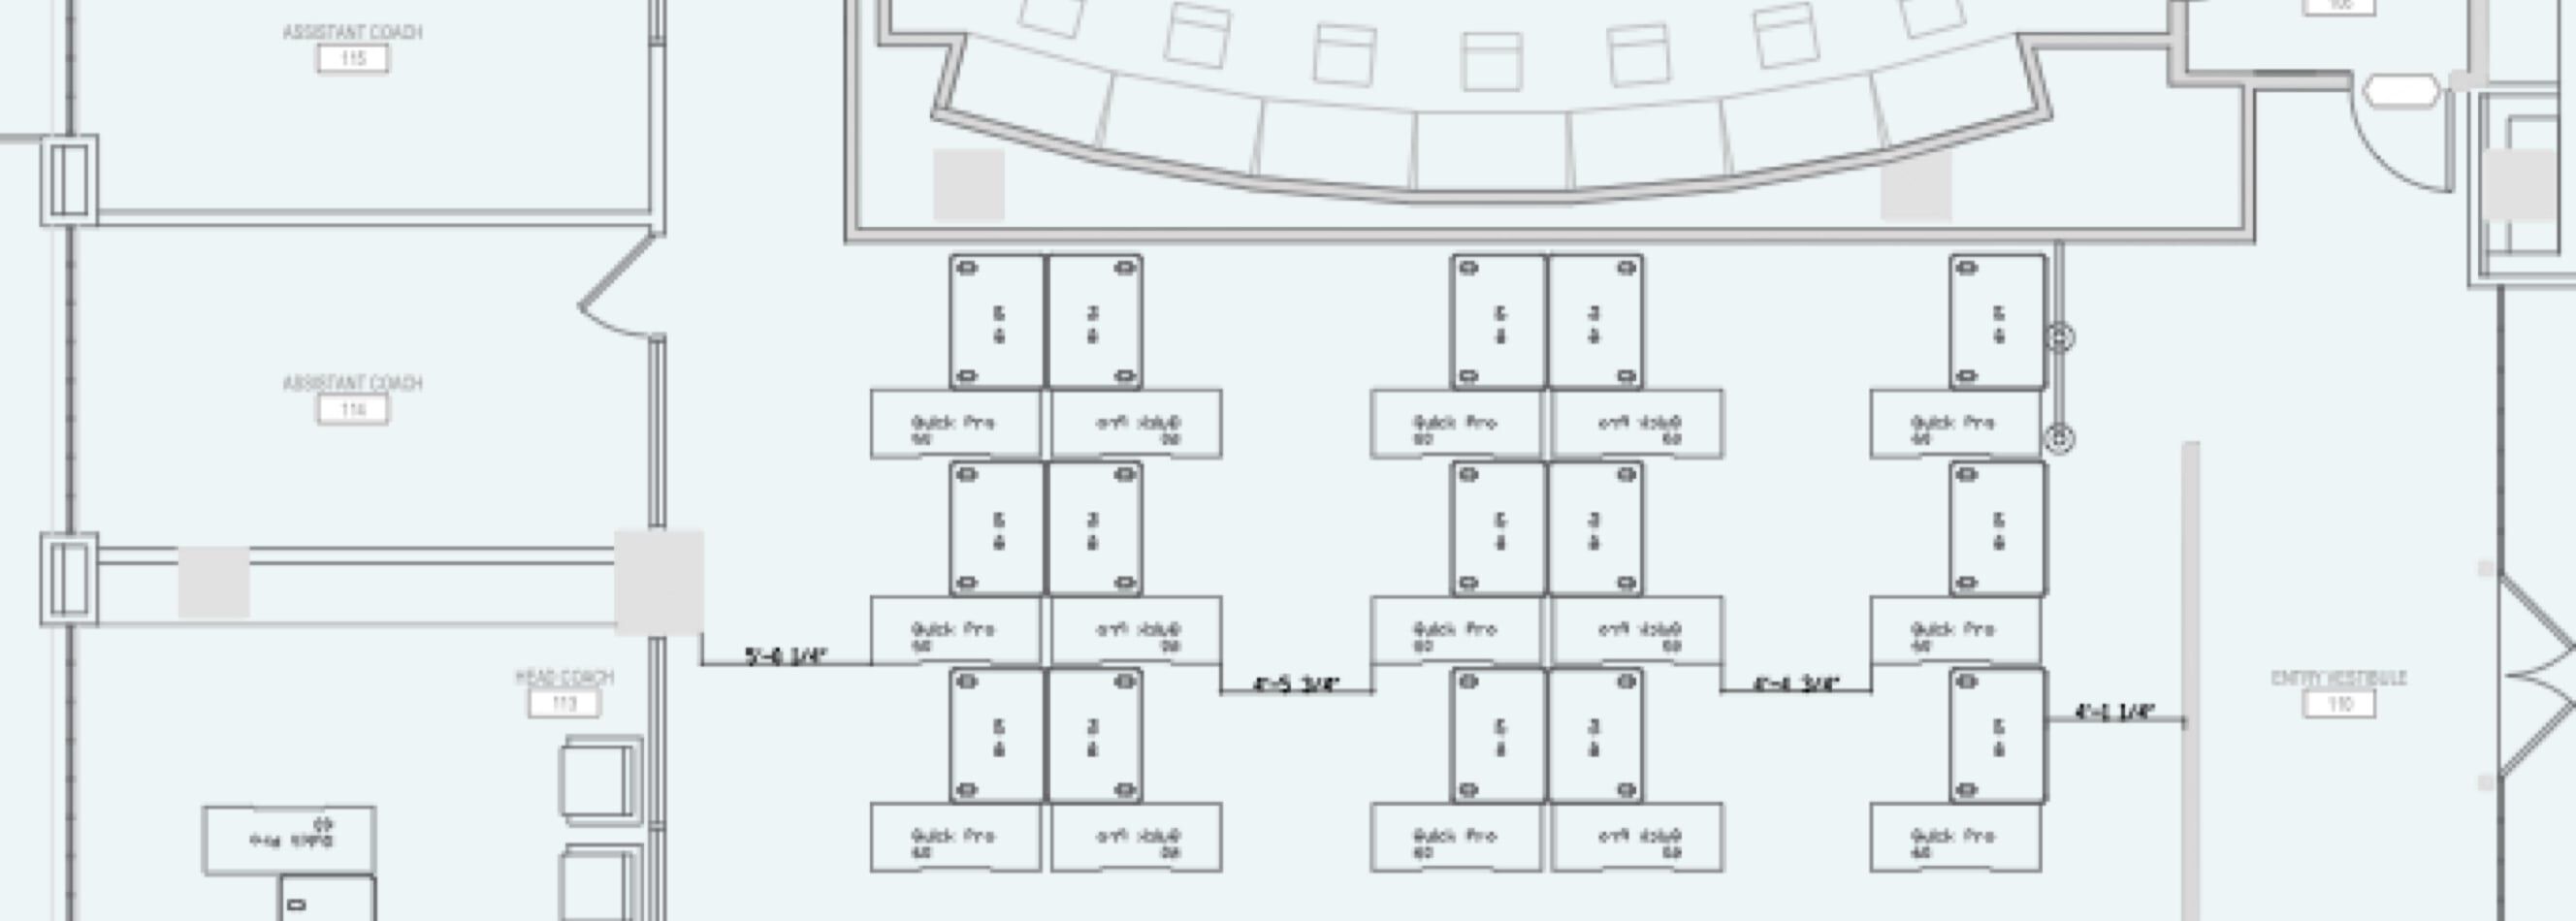 floor plan for dallas mavericks offices  image